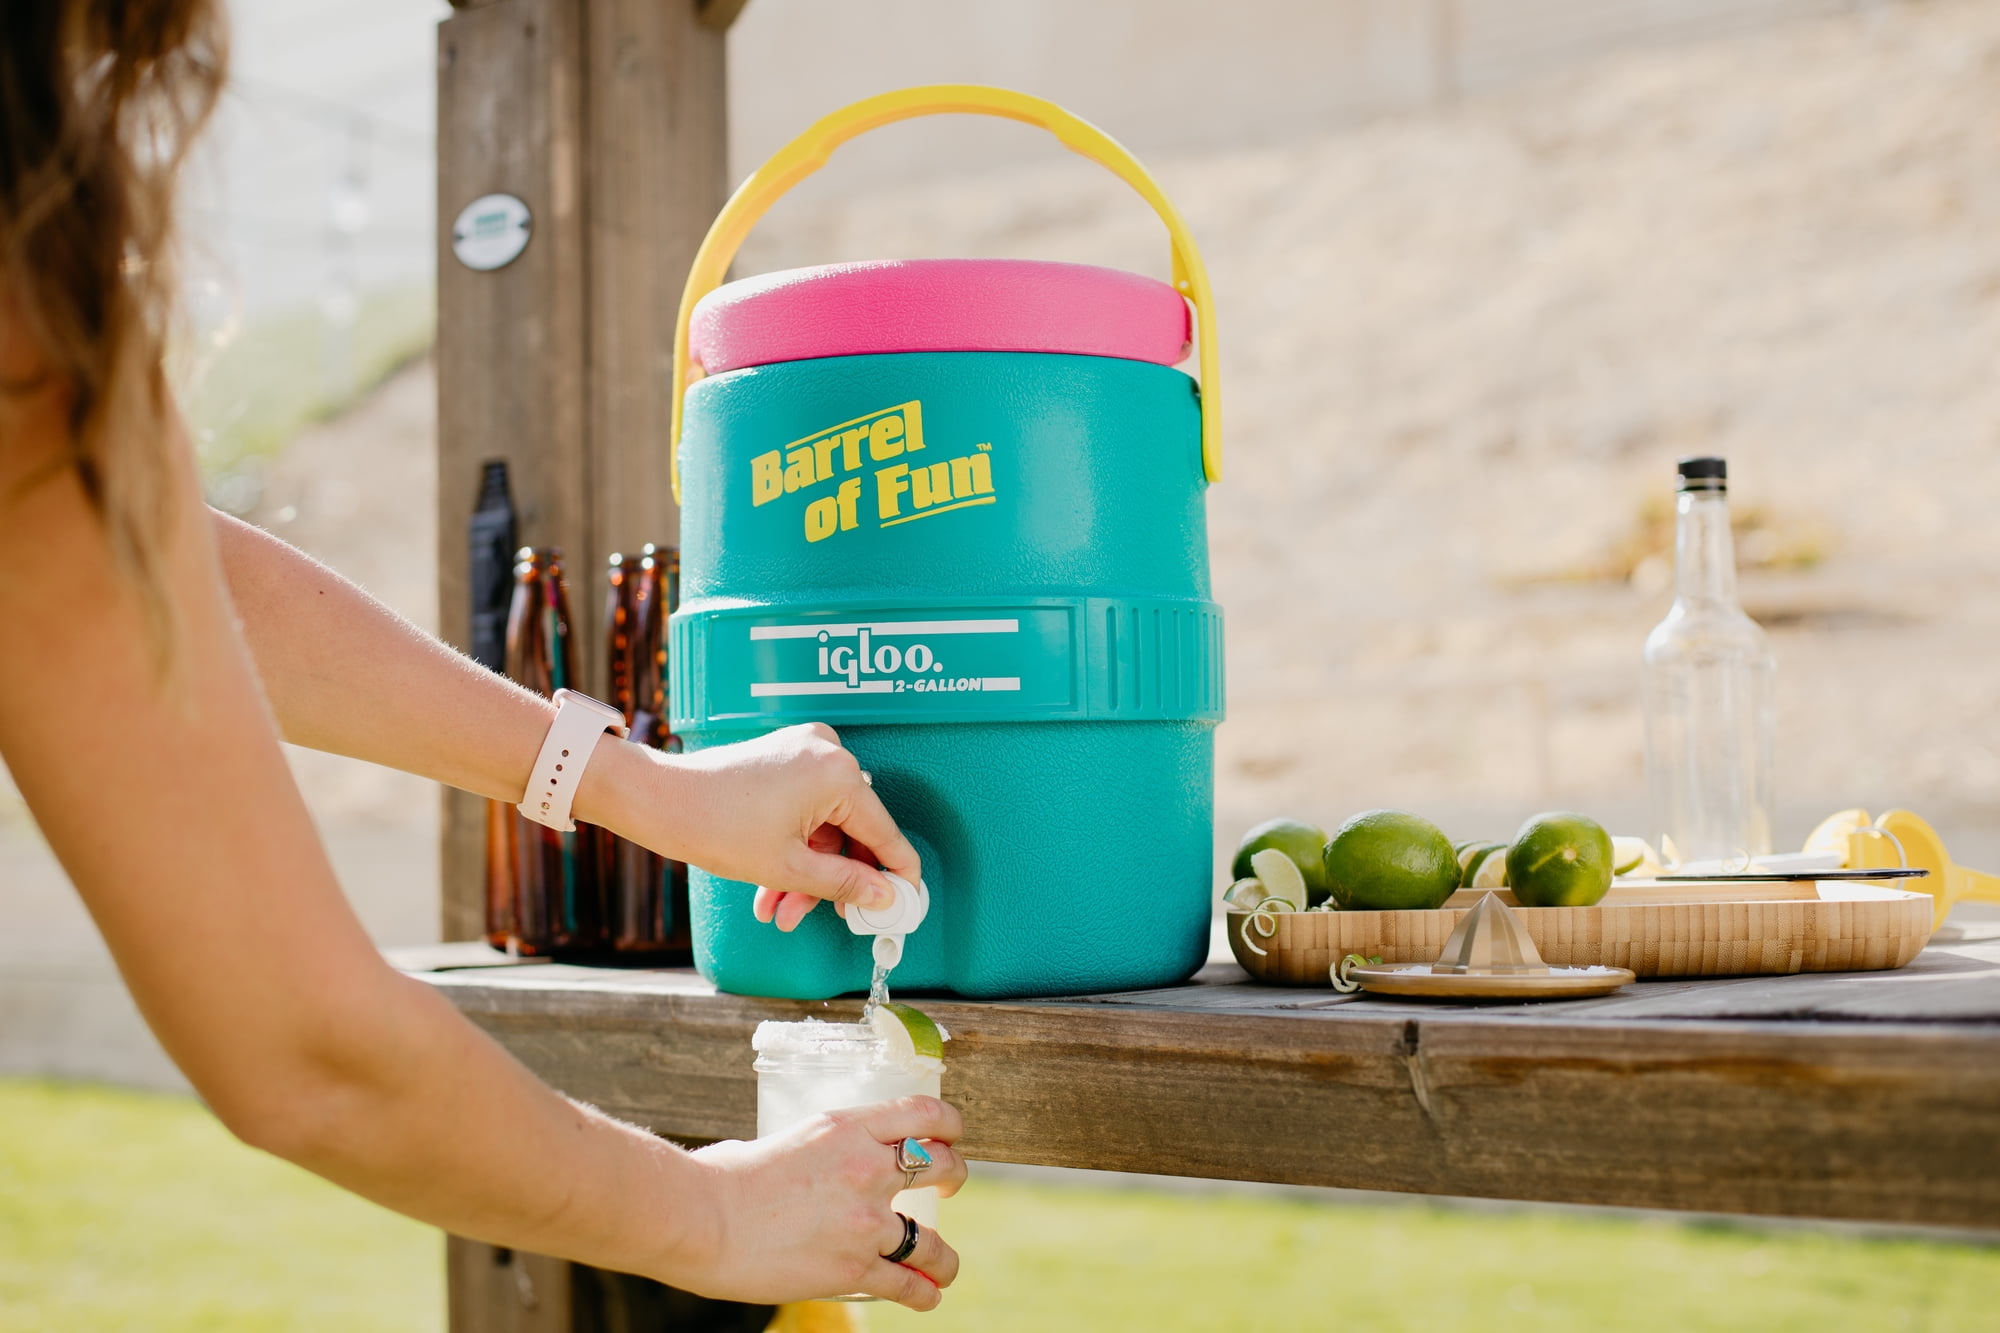 Igloo 2 Gallon Barrel Of Fun Beverage Cooler Jug - Jade - Walmart.com